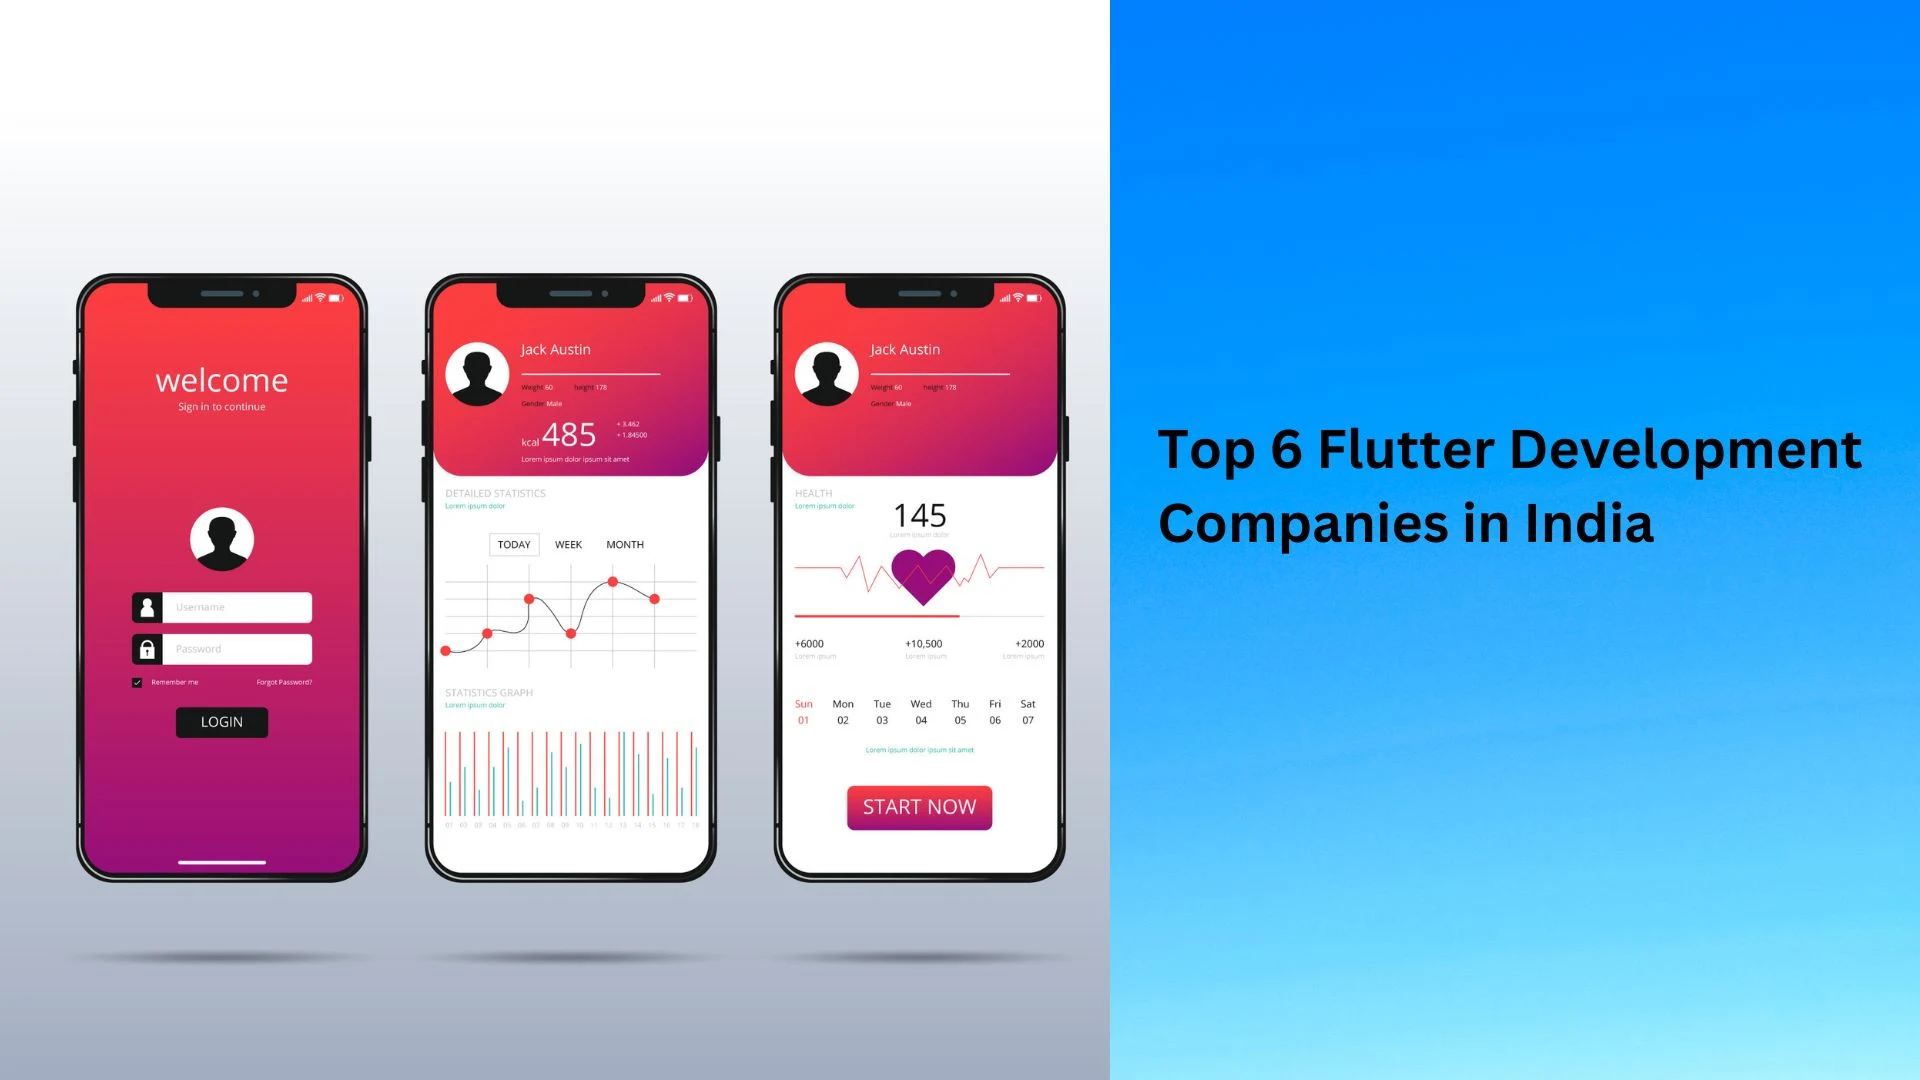 Top 6 Flutter Development Companies in India